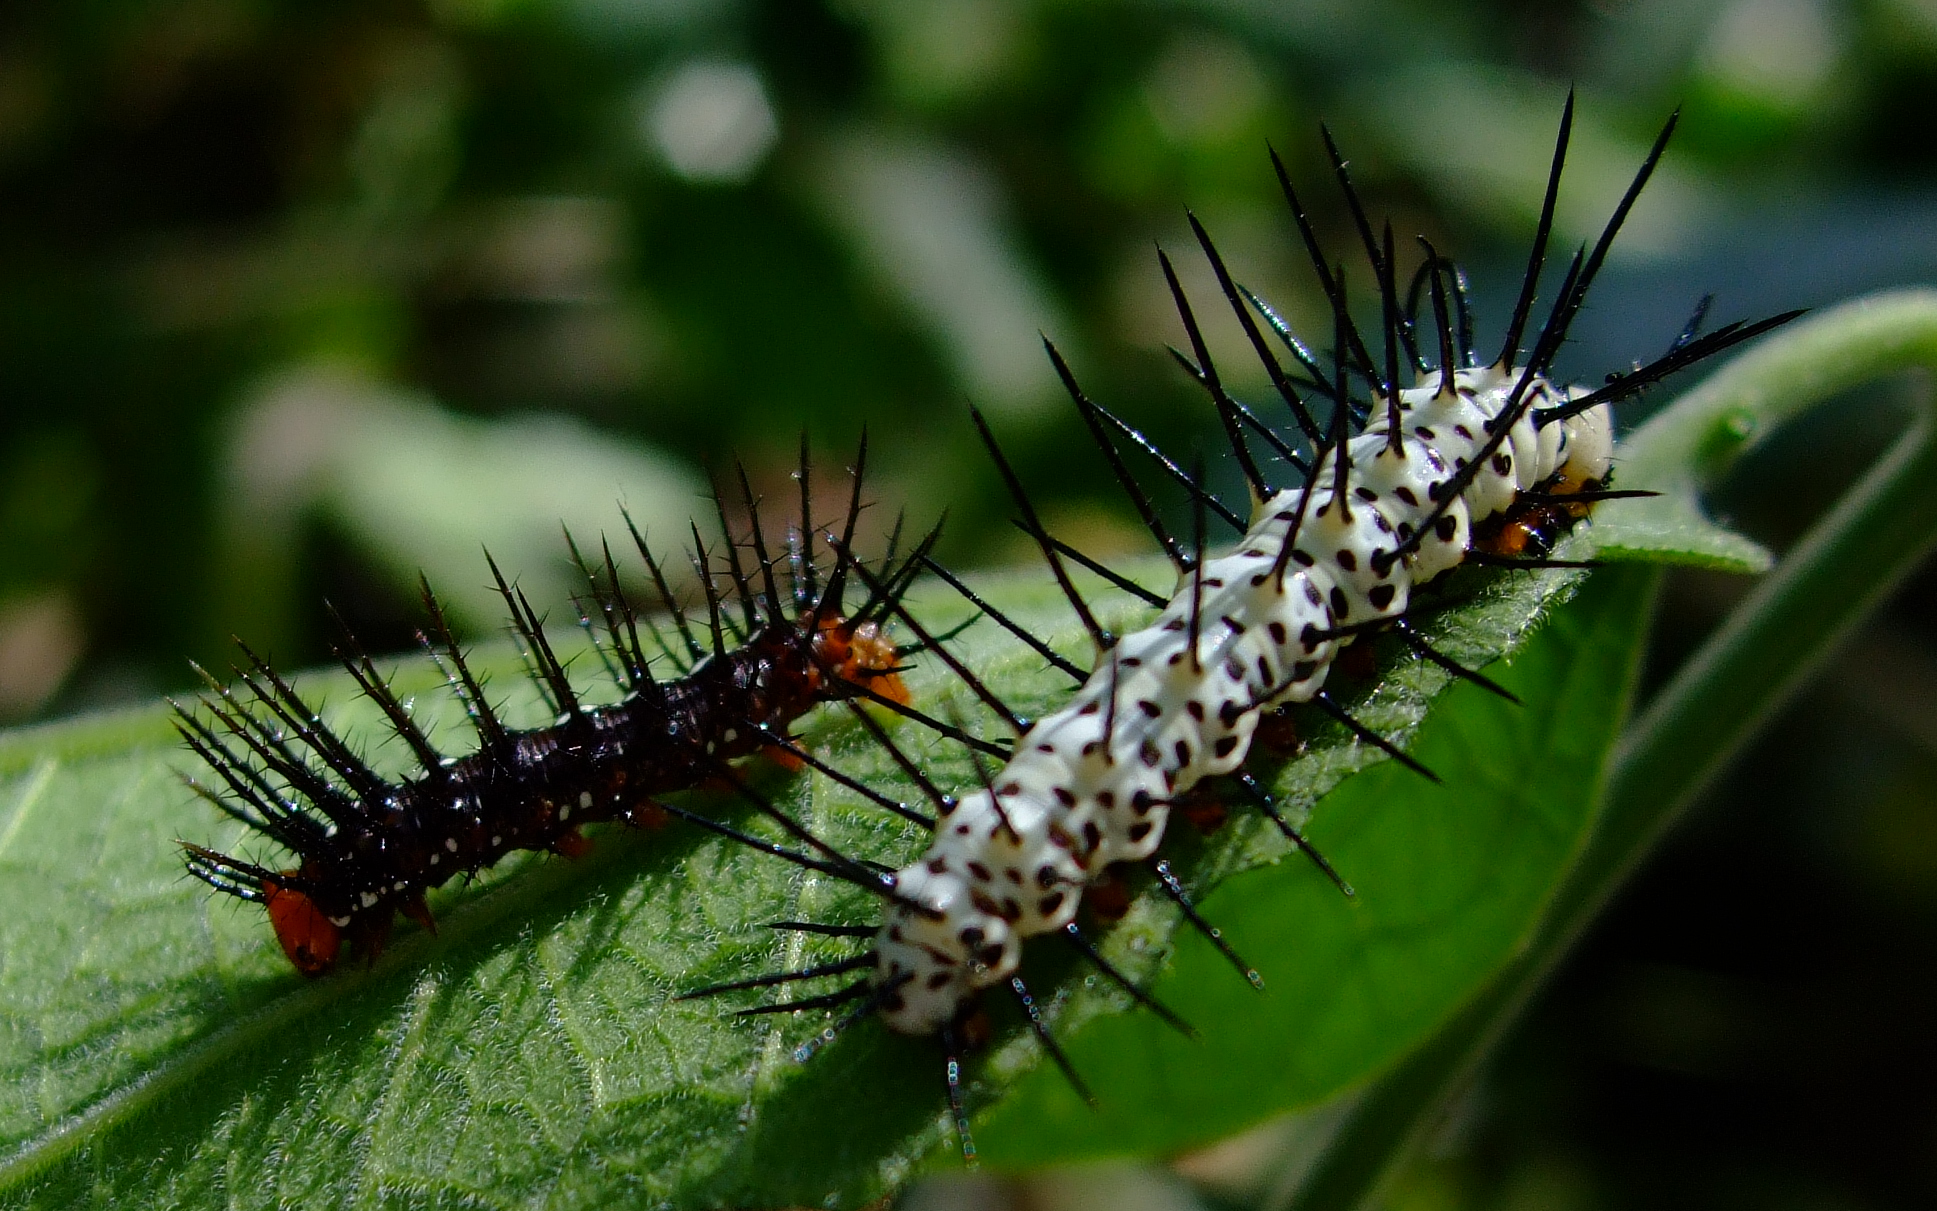 File:Caterpillar-Both-02 crop.JPG - Wikimedia Commons